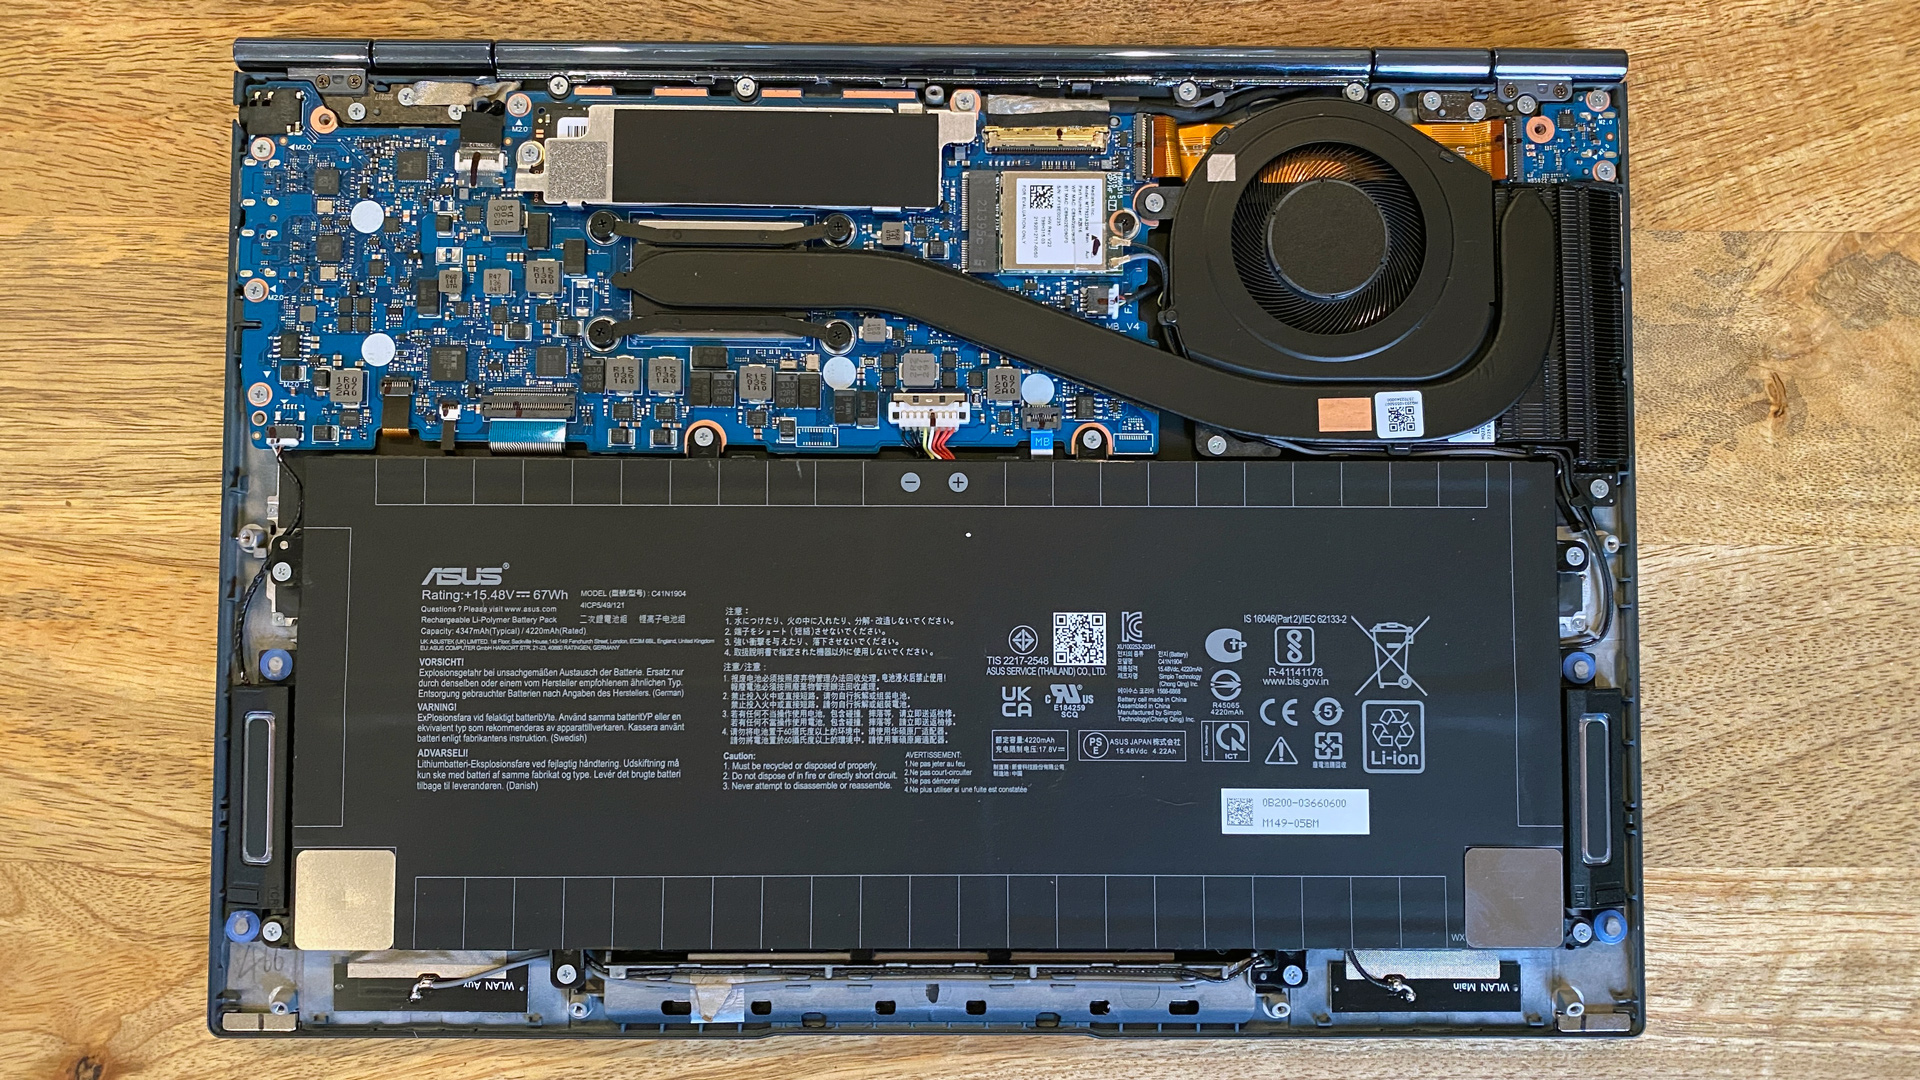 Asus Zenbook S13 OLED